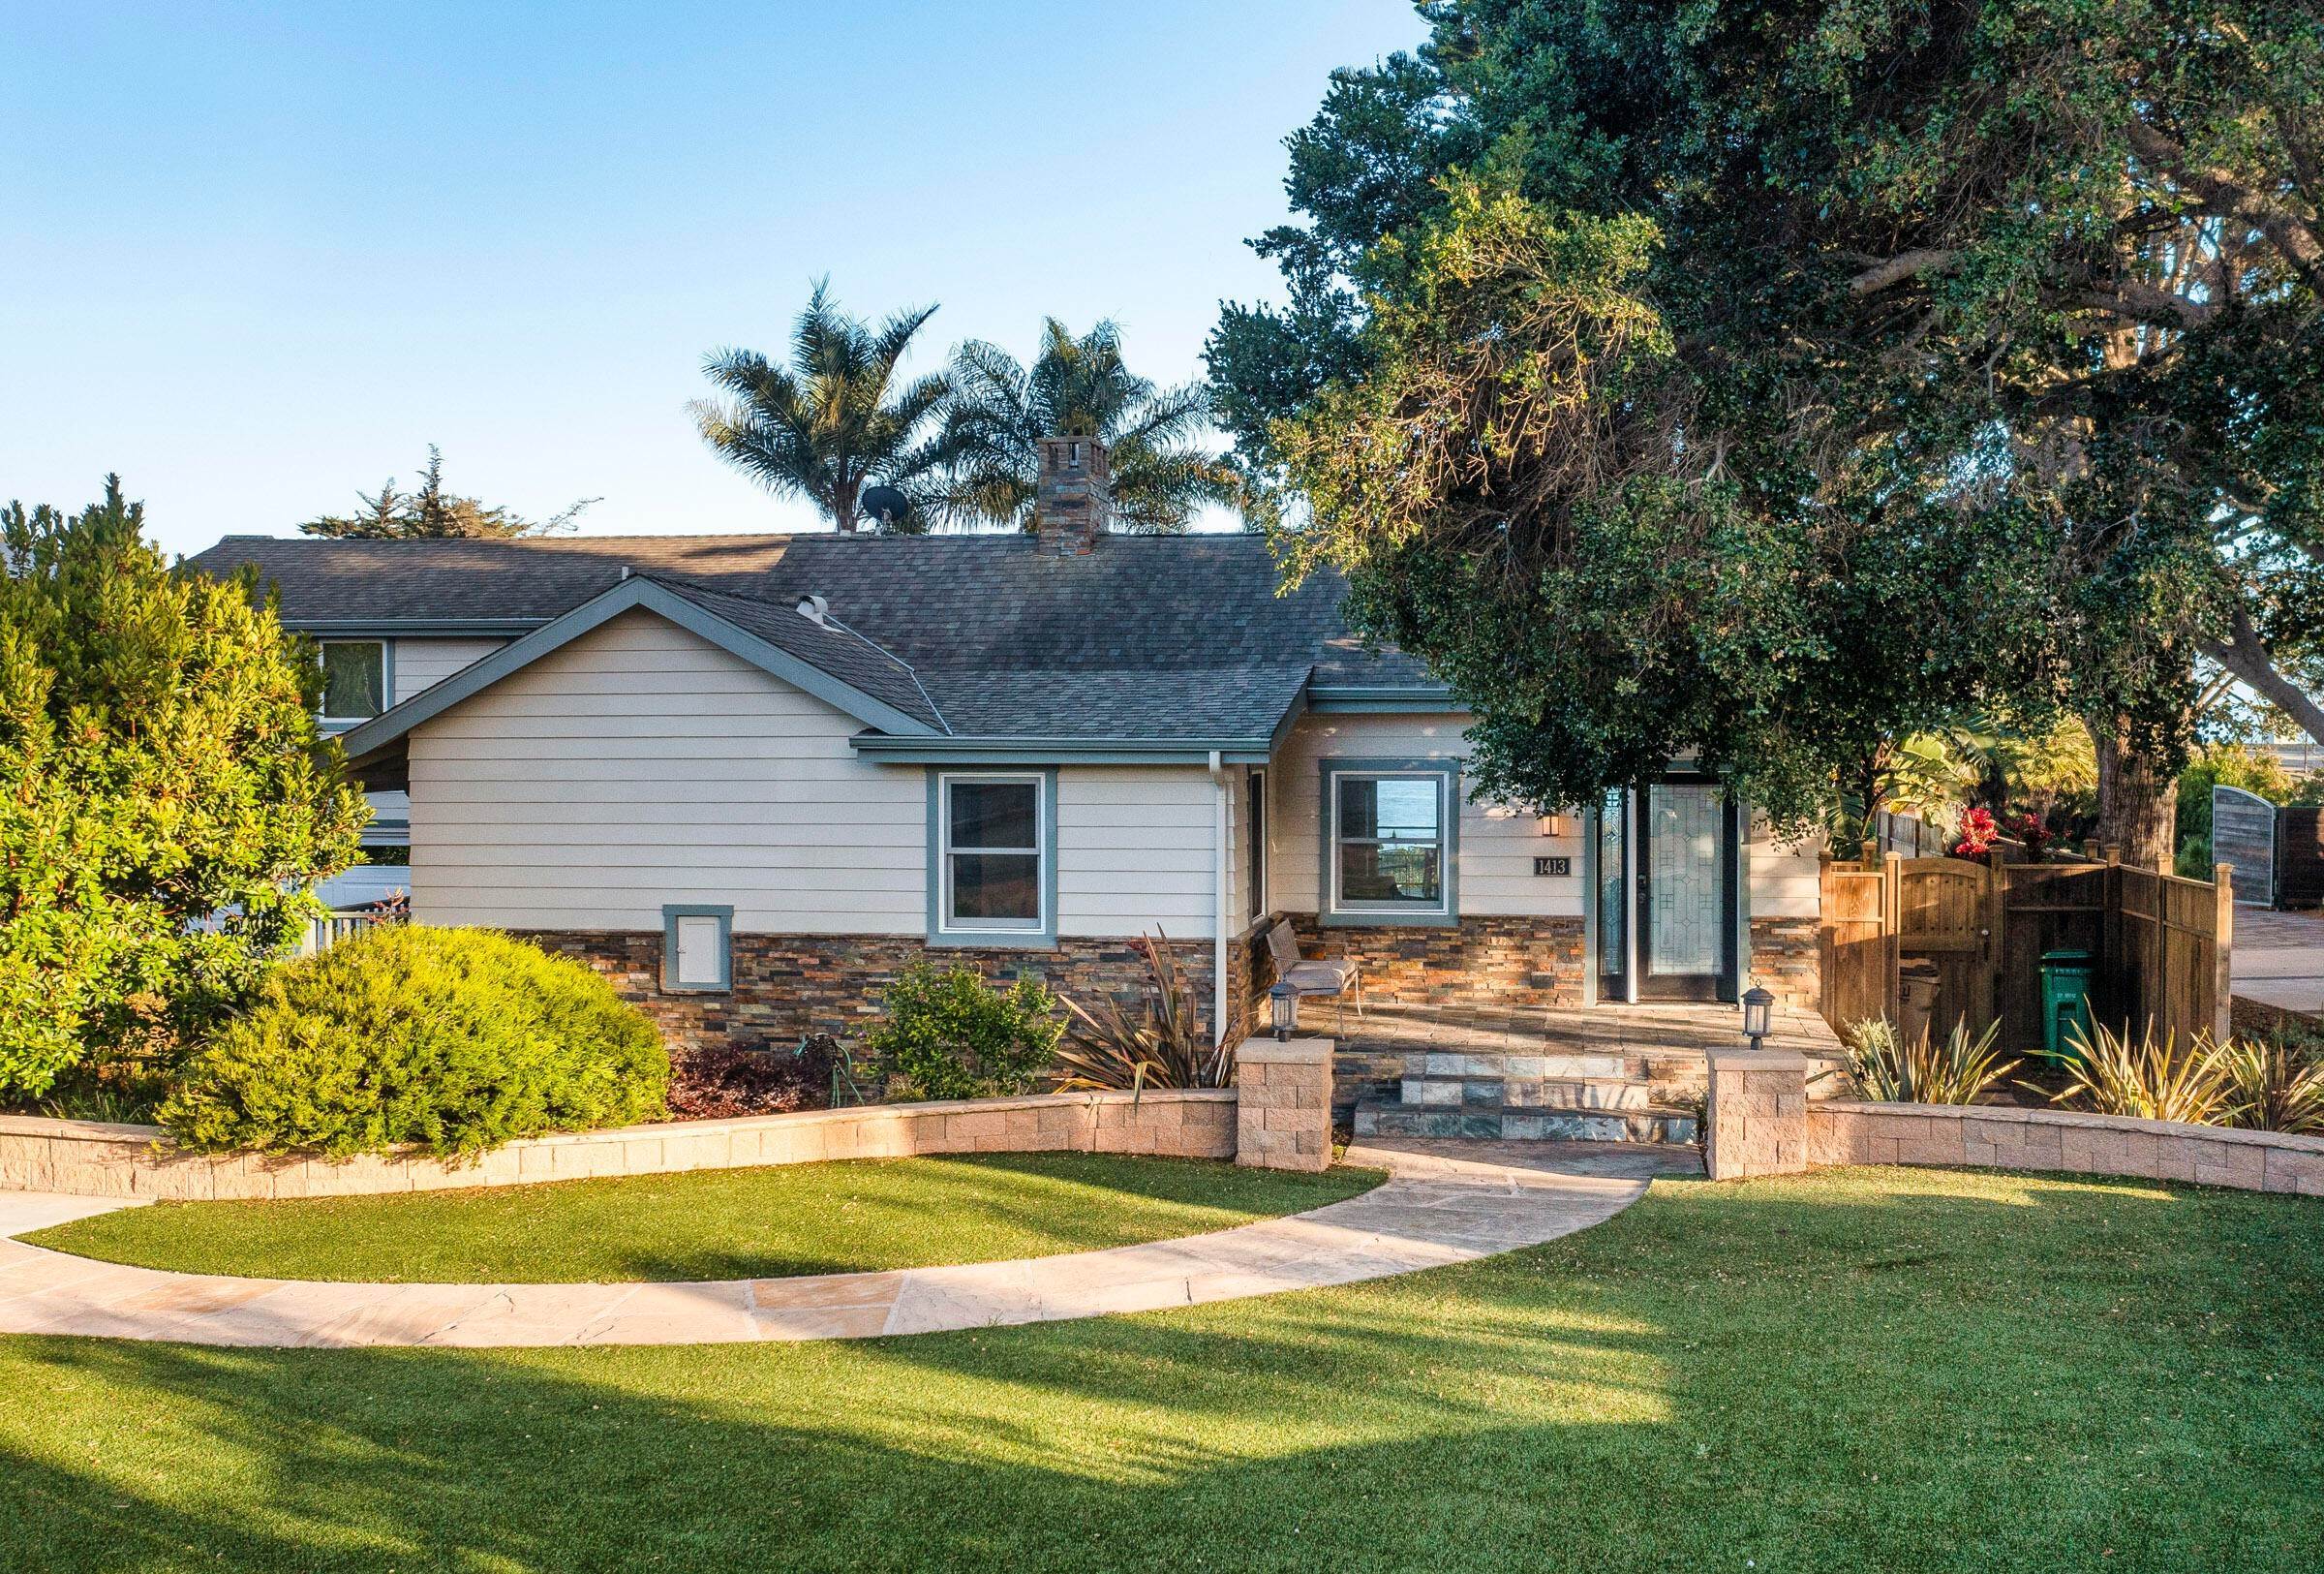 31. Estate for Sale at 1409-1413 Shoreline Drive Santa Barbara, California 93109 United States